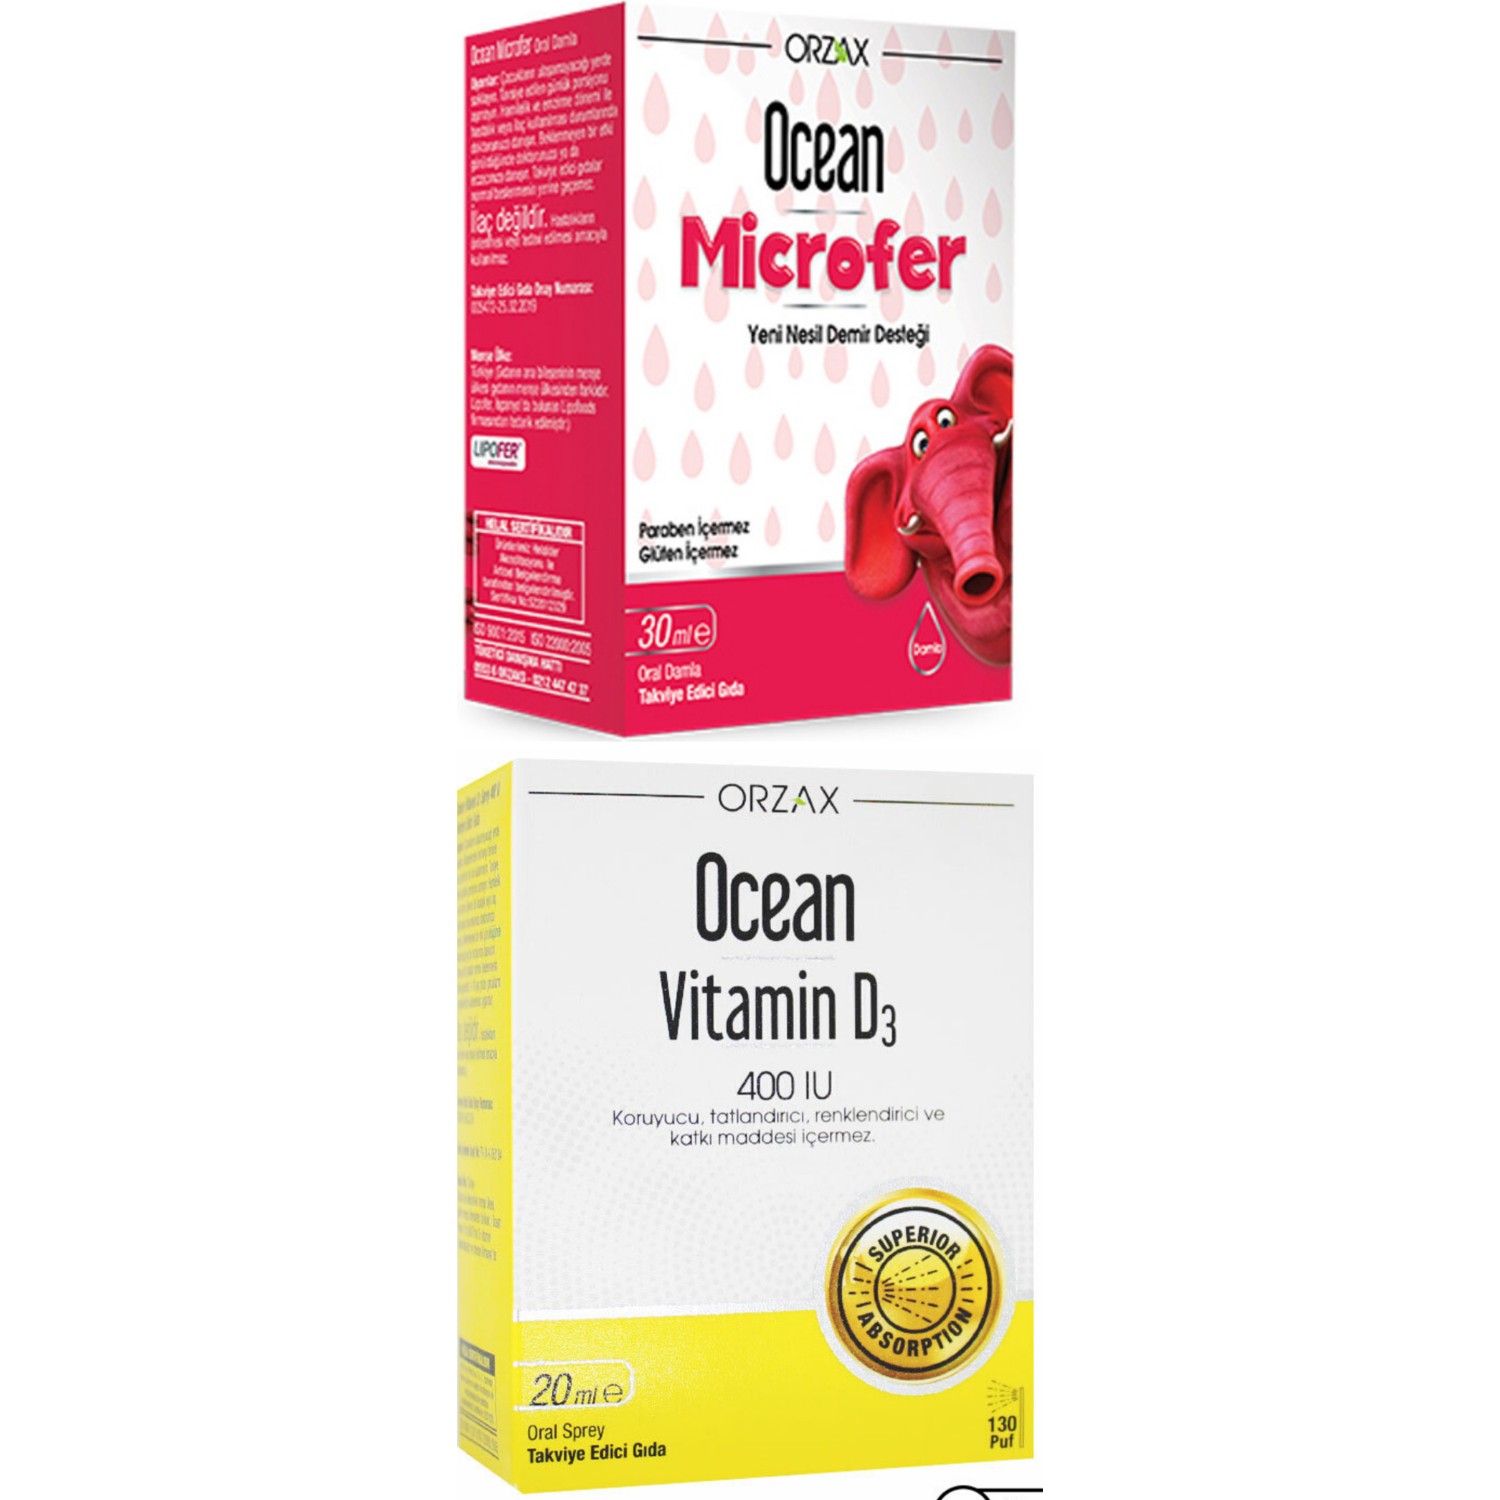 Капли Orzax Ocean Microfer Oral, 30 мл + Витамин D3 Ocean 400 IU, 20 мл